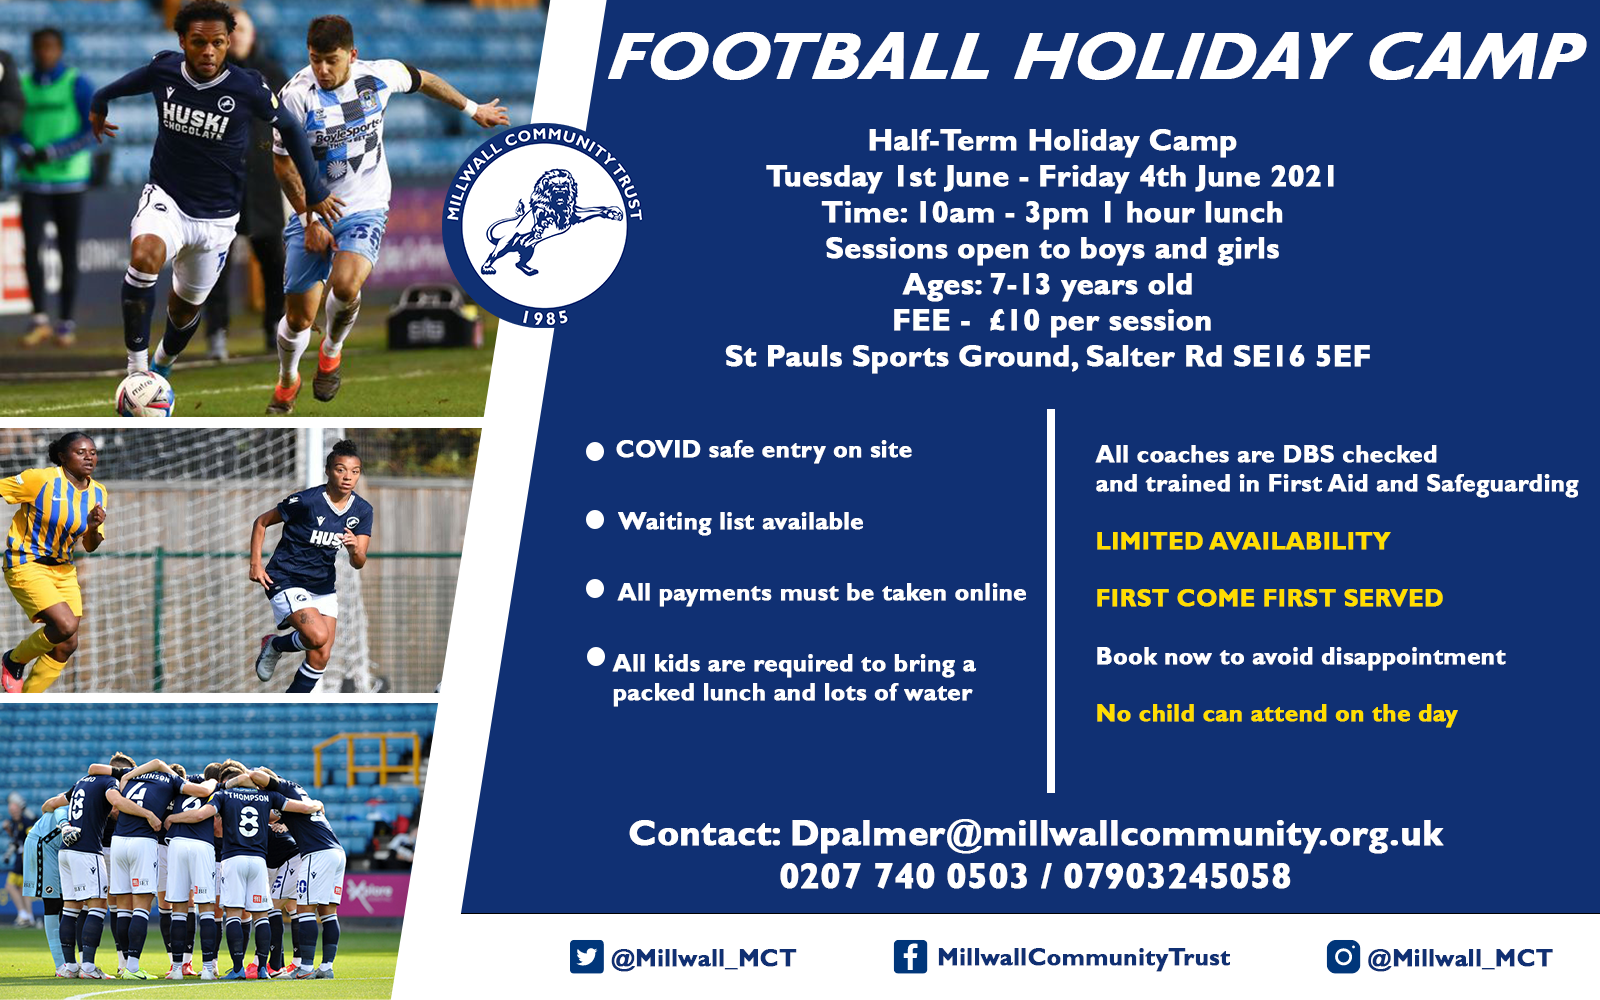 Millwall Community Trust - Football Holiday Camp